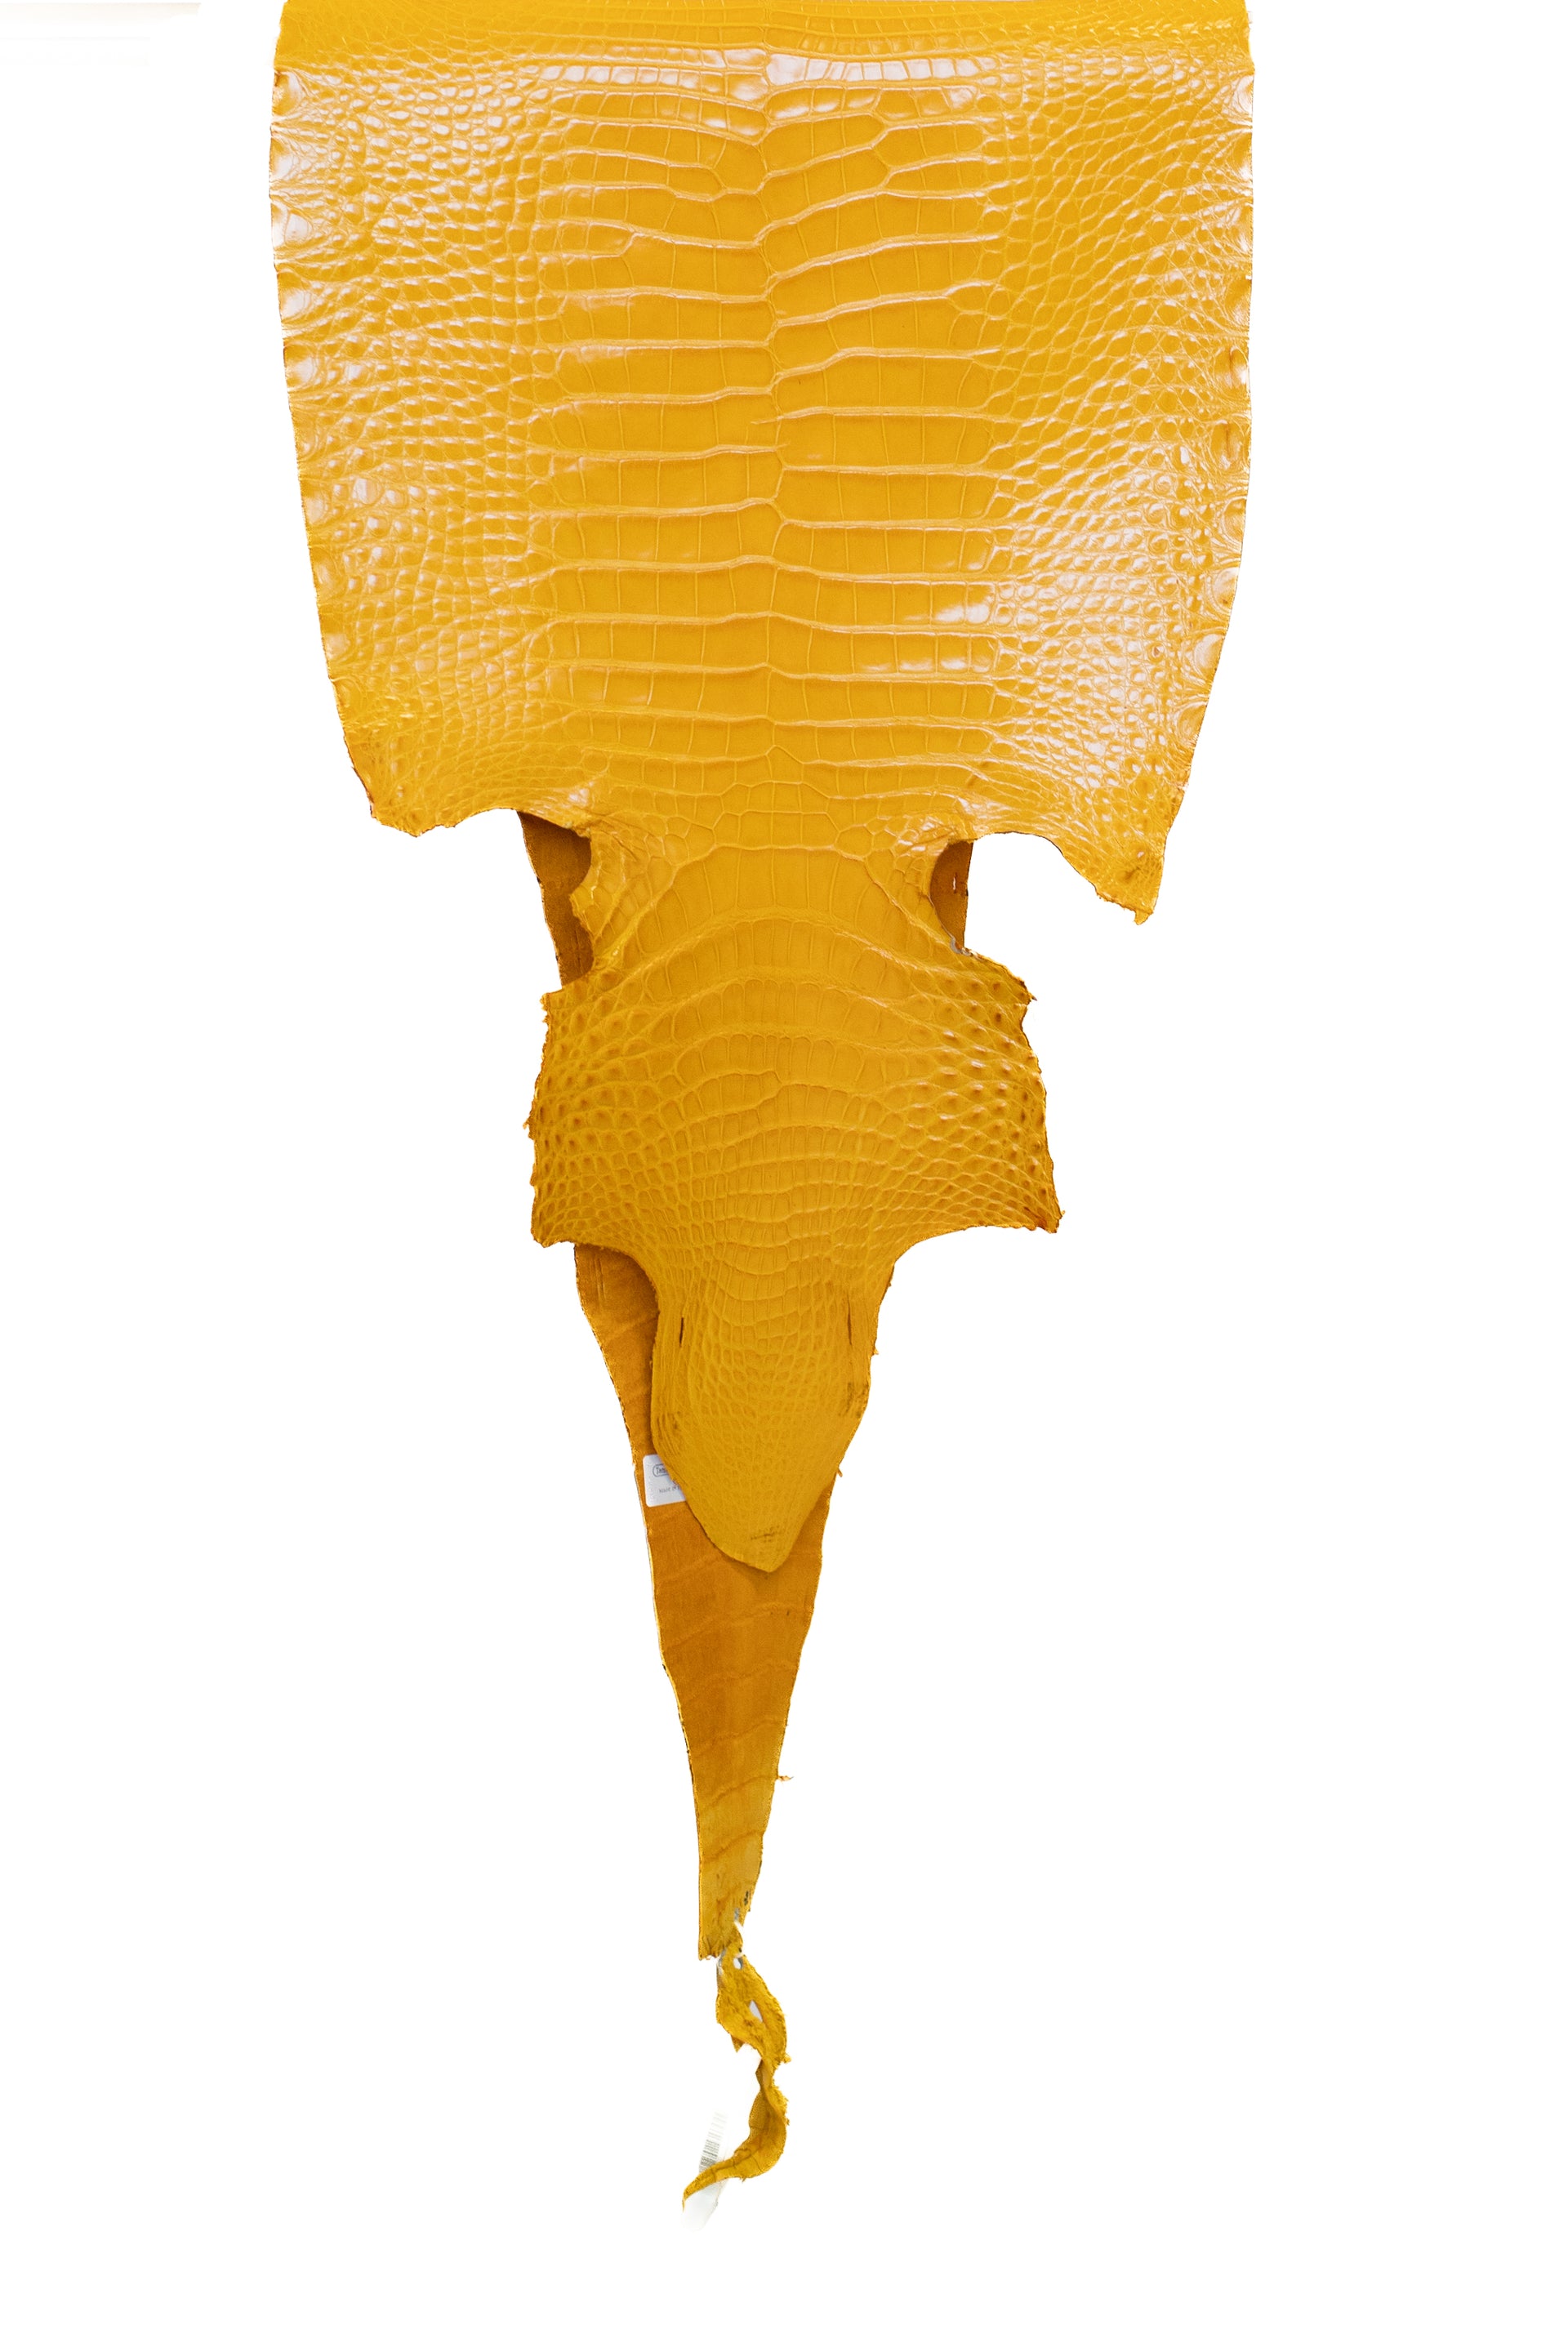 33 cm Grade 2/3 Golden Yellow Millennium Farm Raised American Alligator Leather - Tag: FL17-0036169